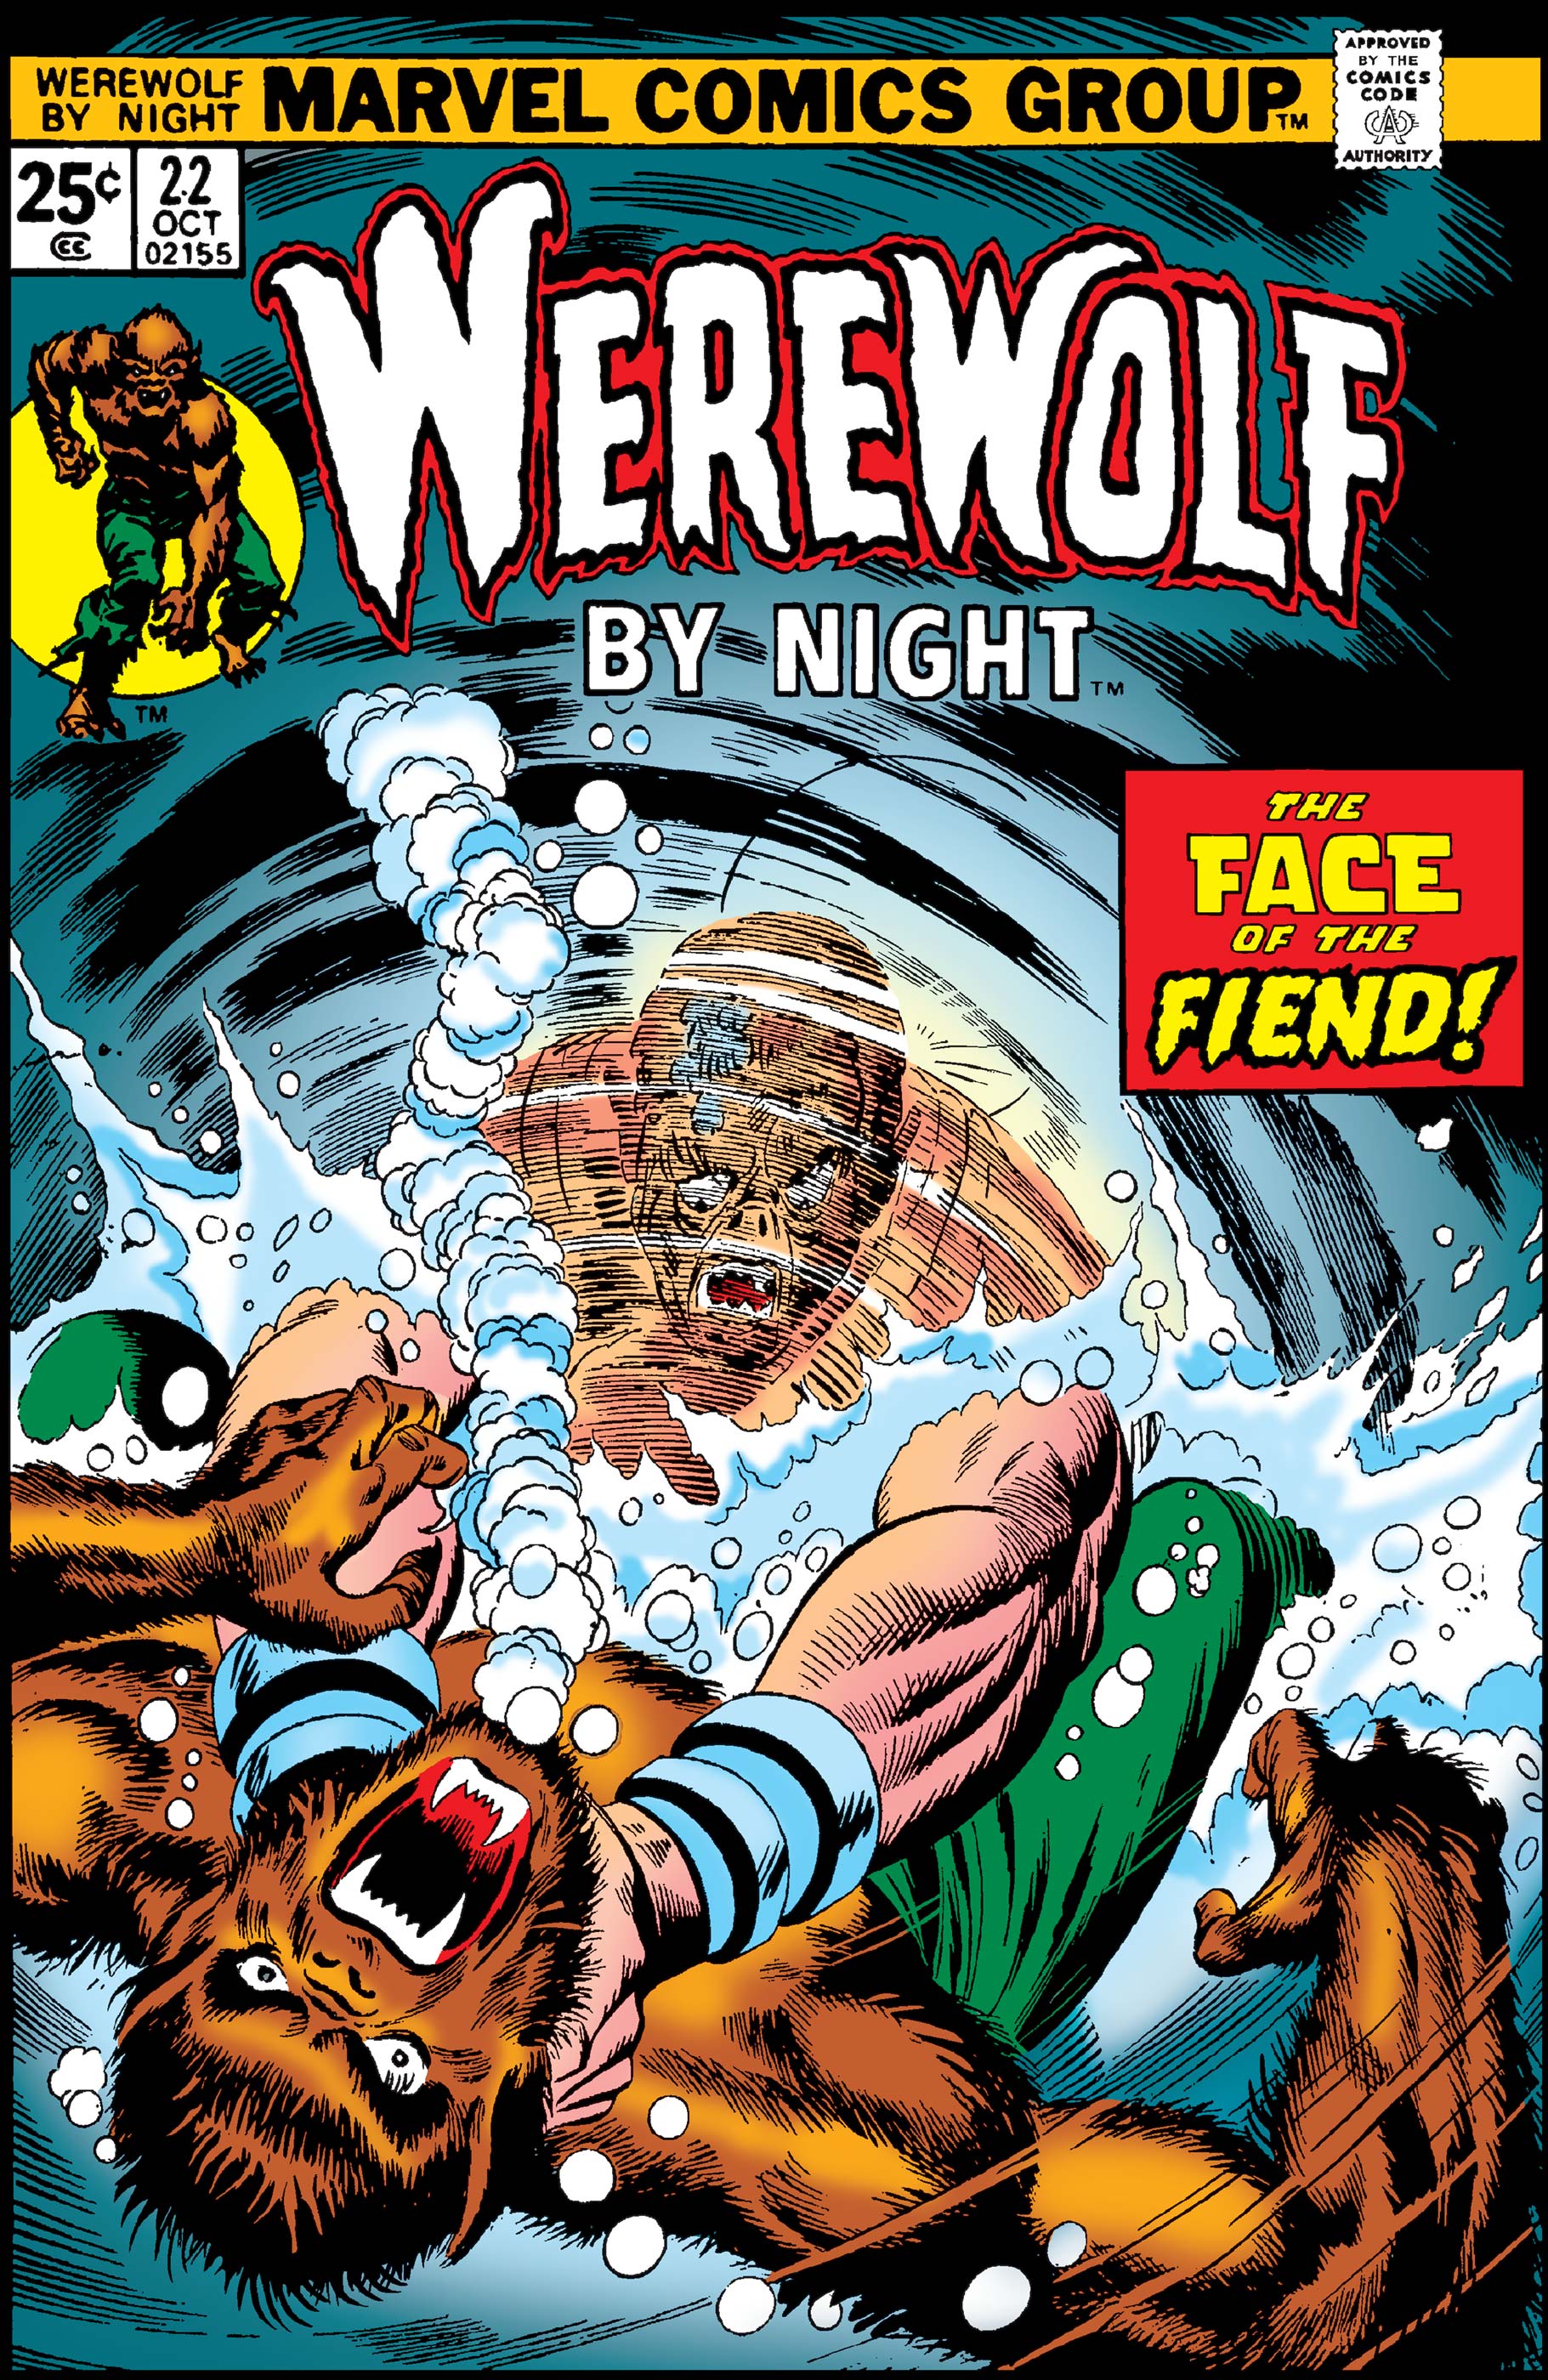 Werewolf By Night (1972) #22 | Comics | Marvel.com